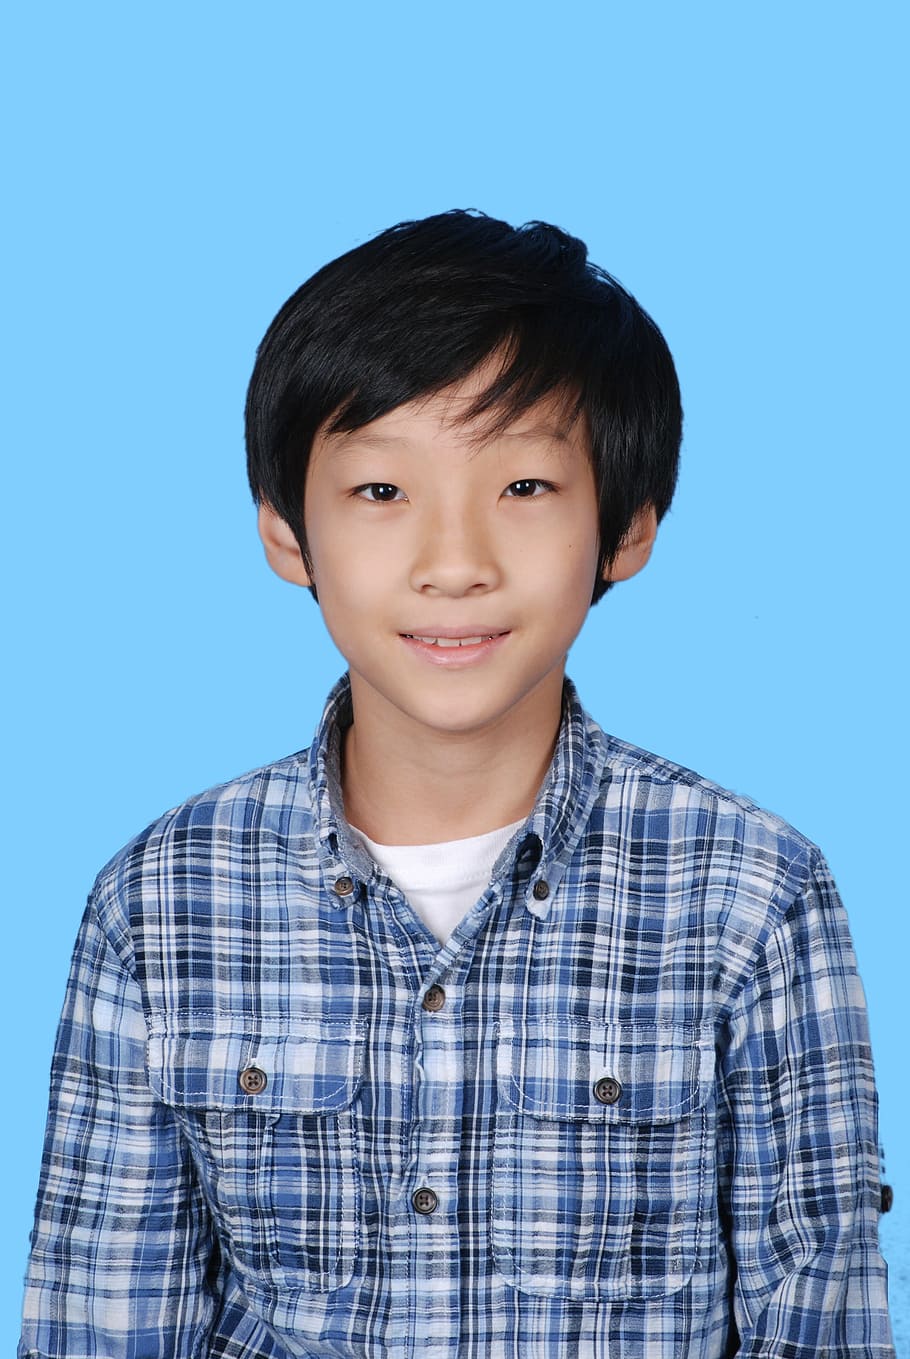 blue, plaid, dress shirt photo, Boy, Portrait, Child, Asian, Posing, kid, smiling